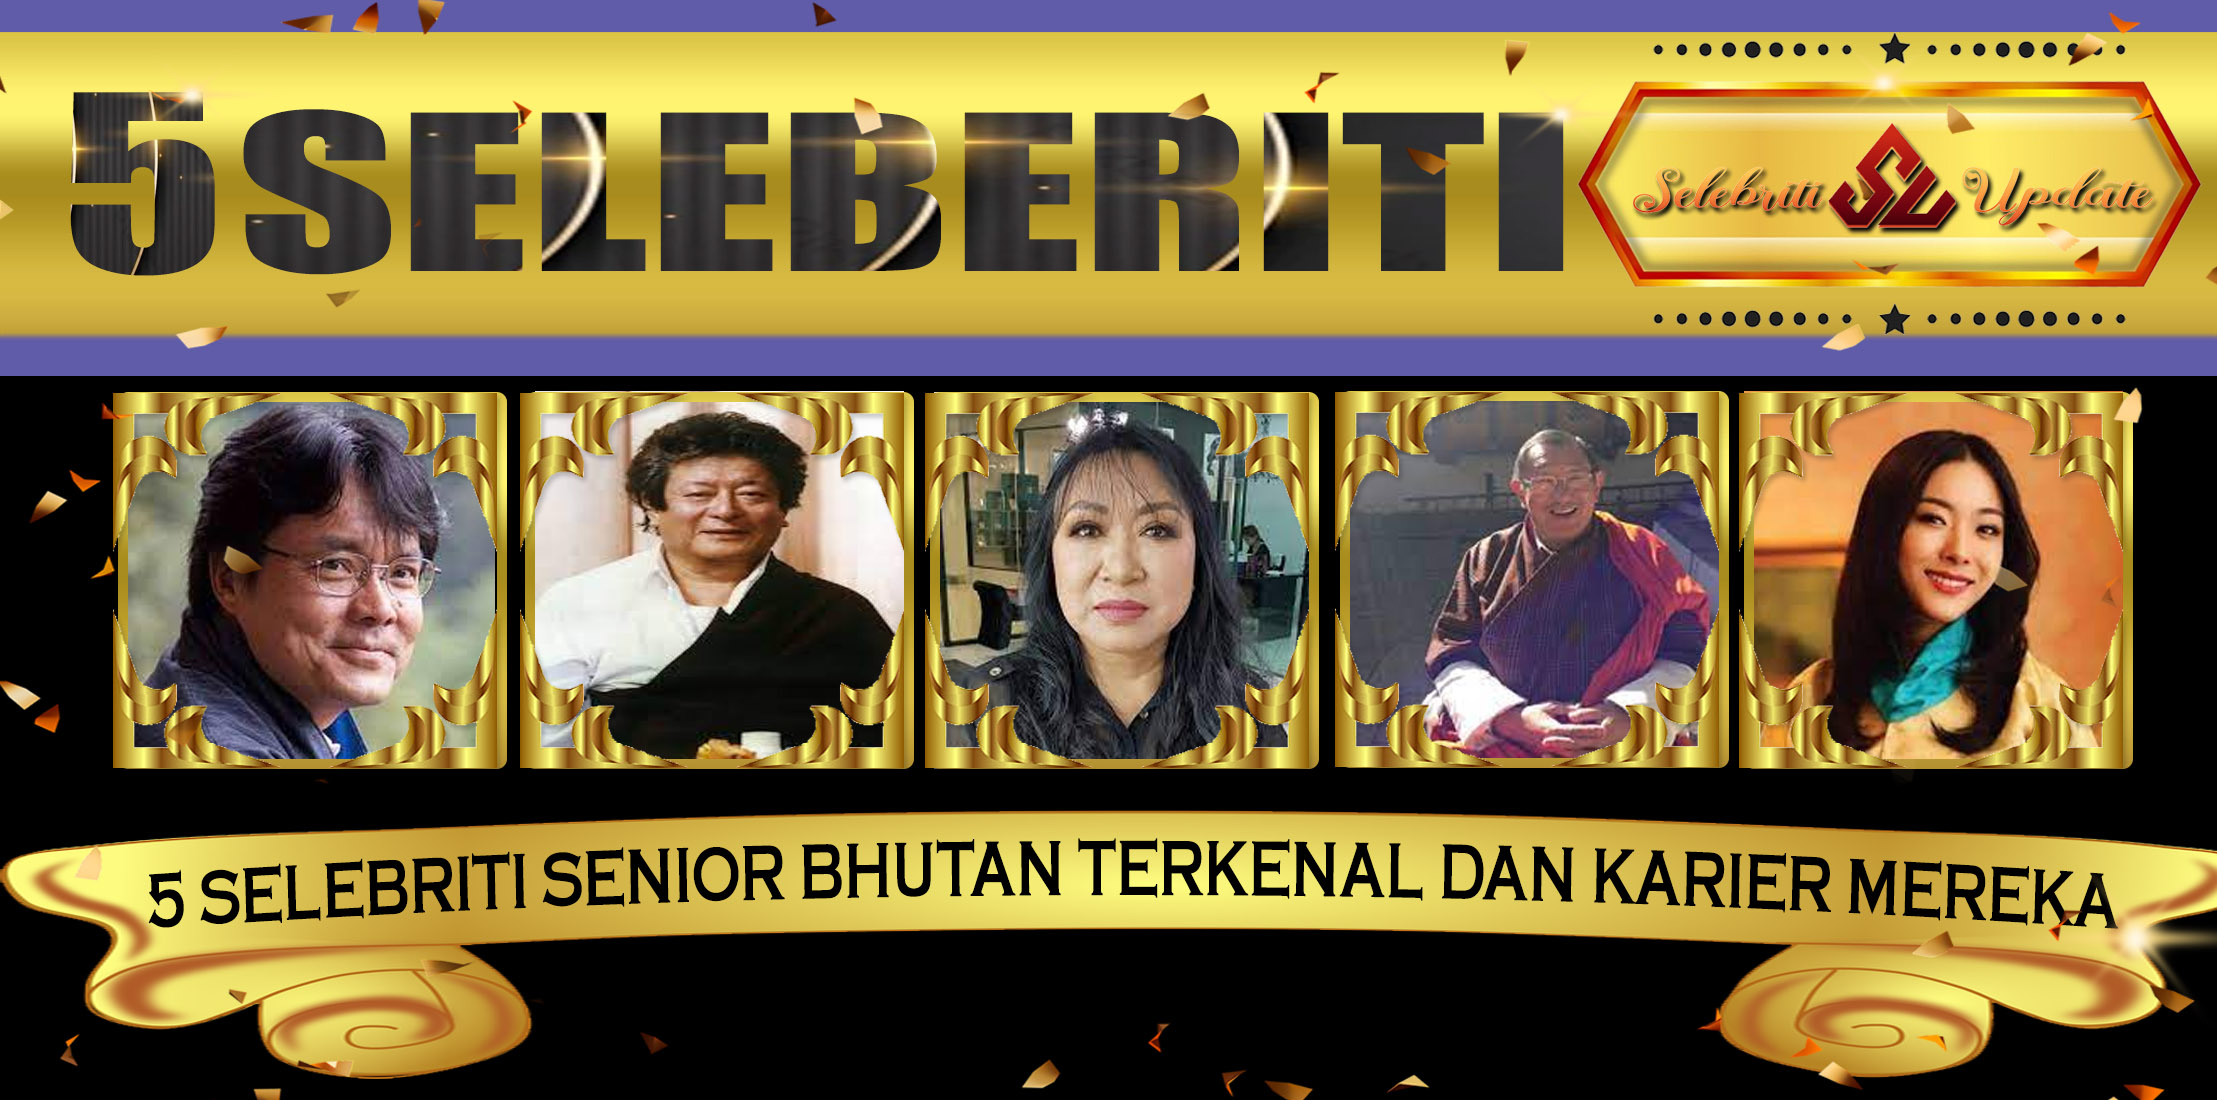 5 Selebriti Senior Bhutan